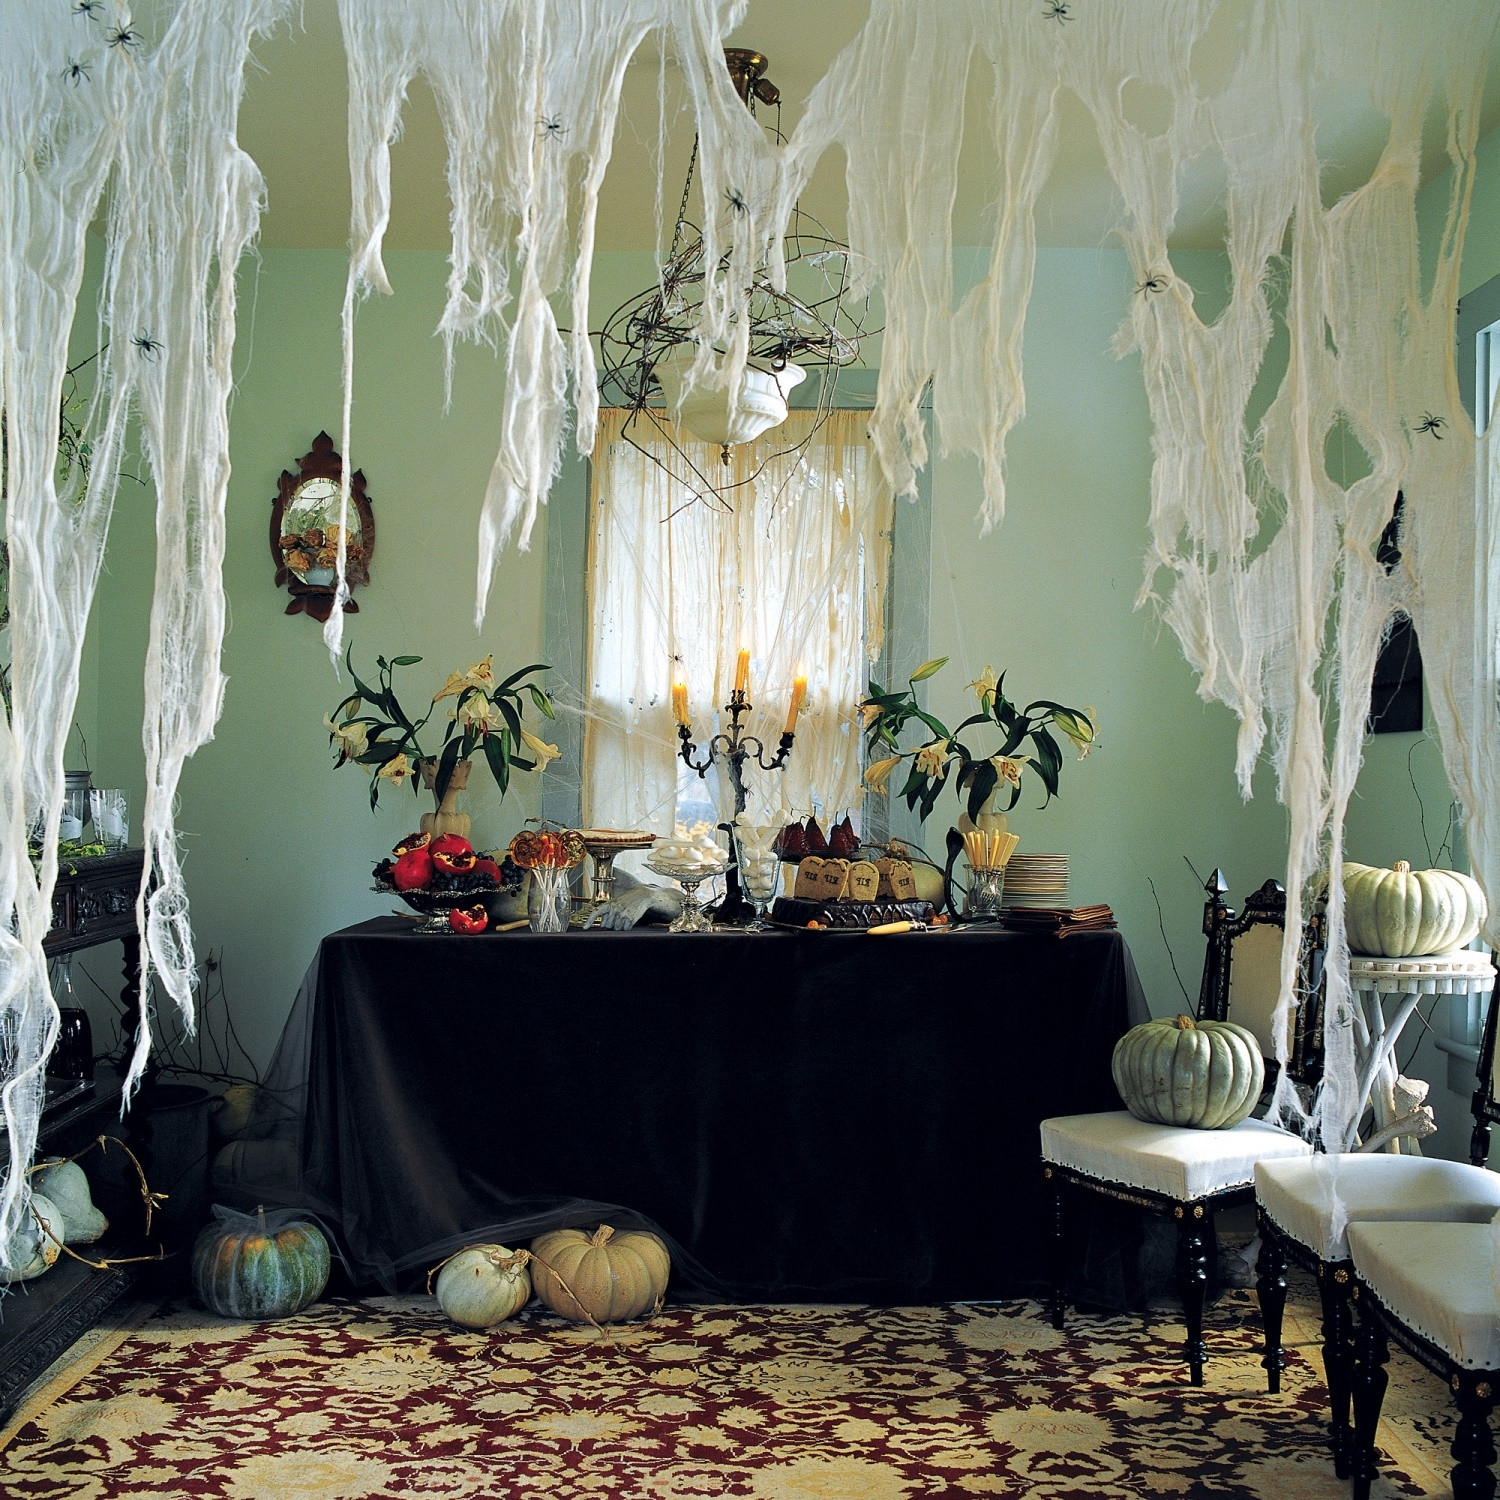 Indoor Halloween Party Decoration Ideas
 CREATIVE HANDMADE INDOOR HALLOWEEN DECORATIONS